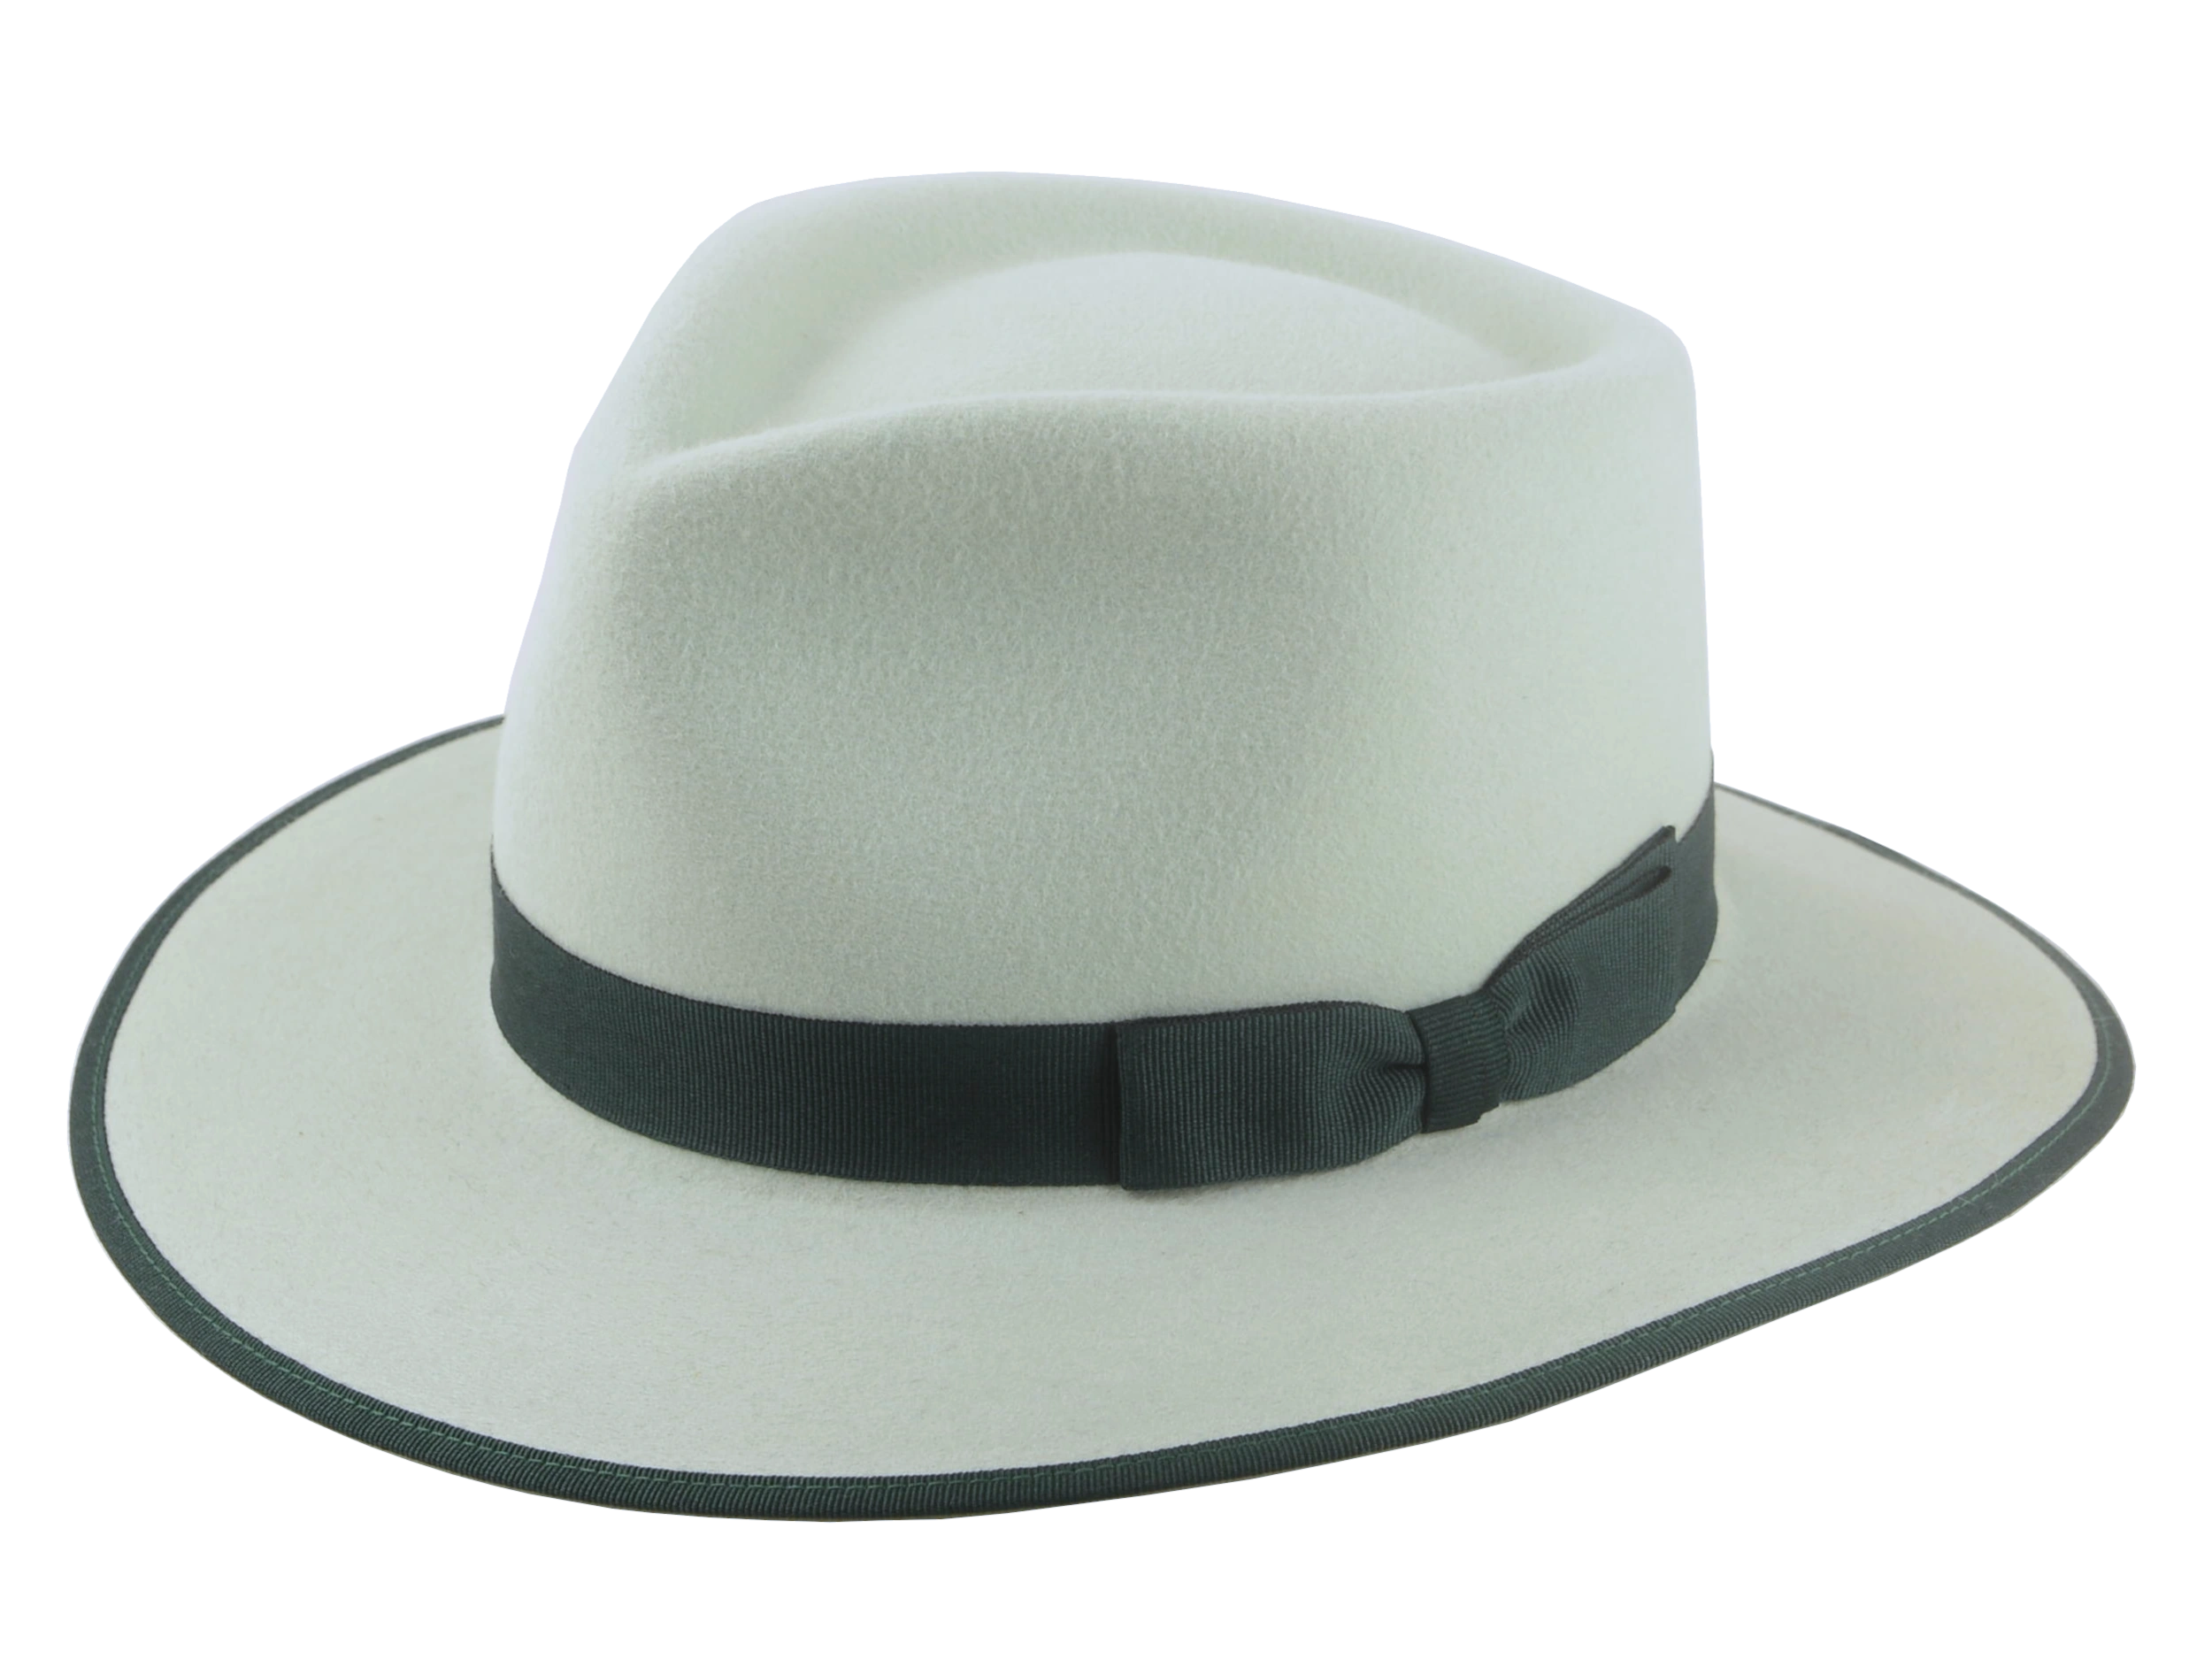 Pistachio green fedora hat with a distinct teardrop crown design